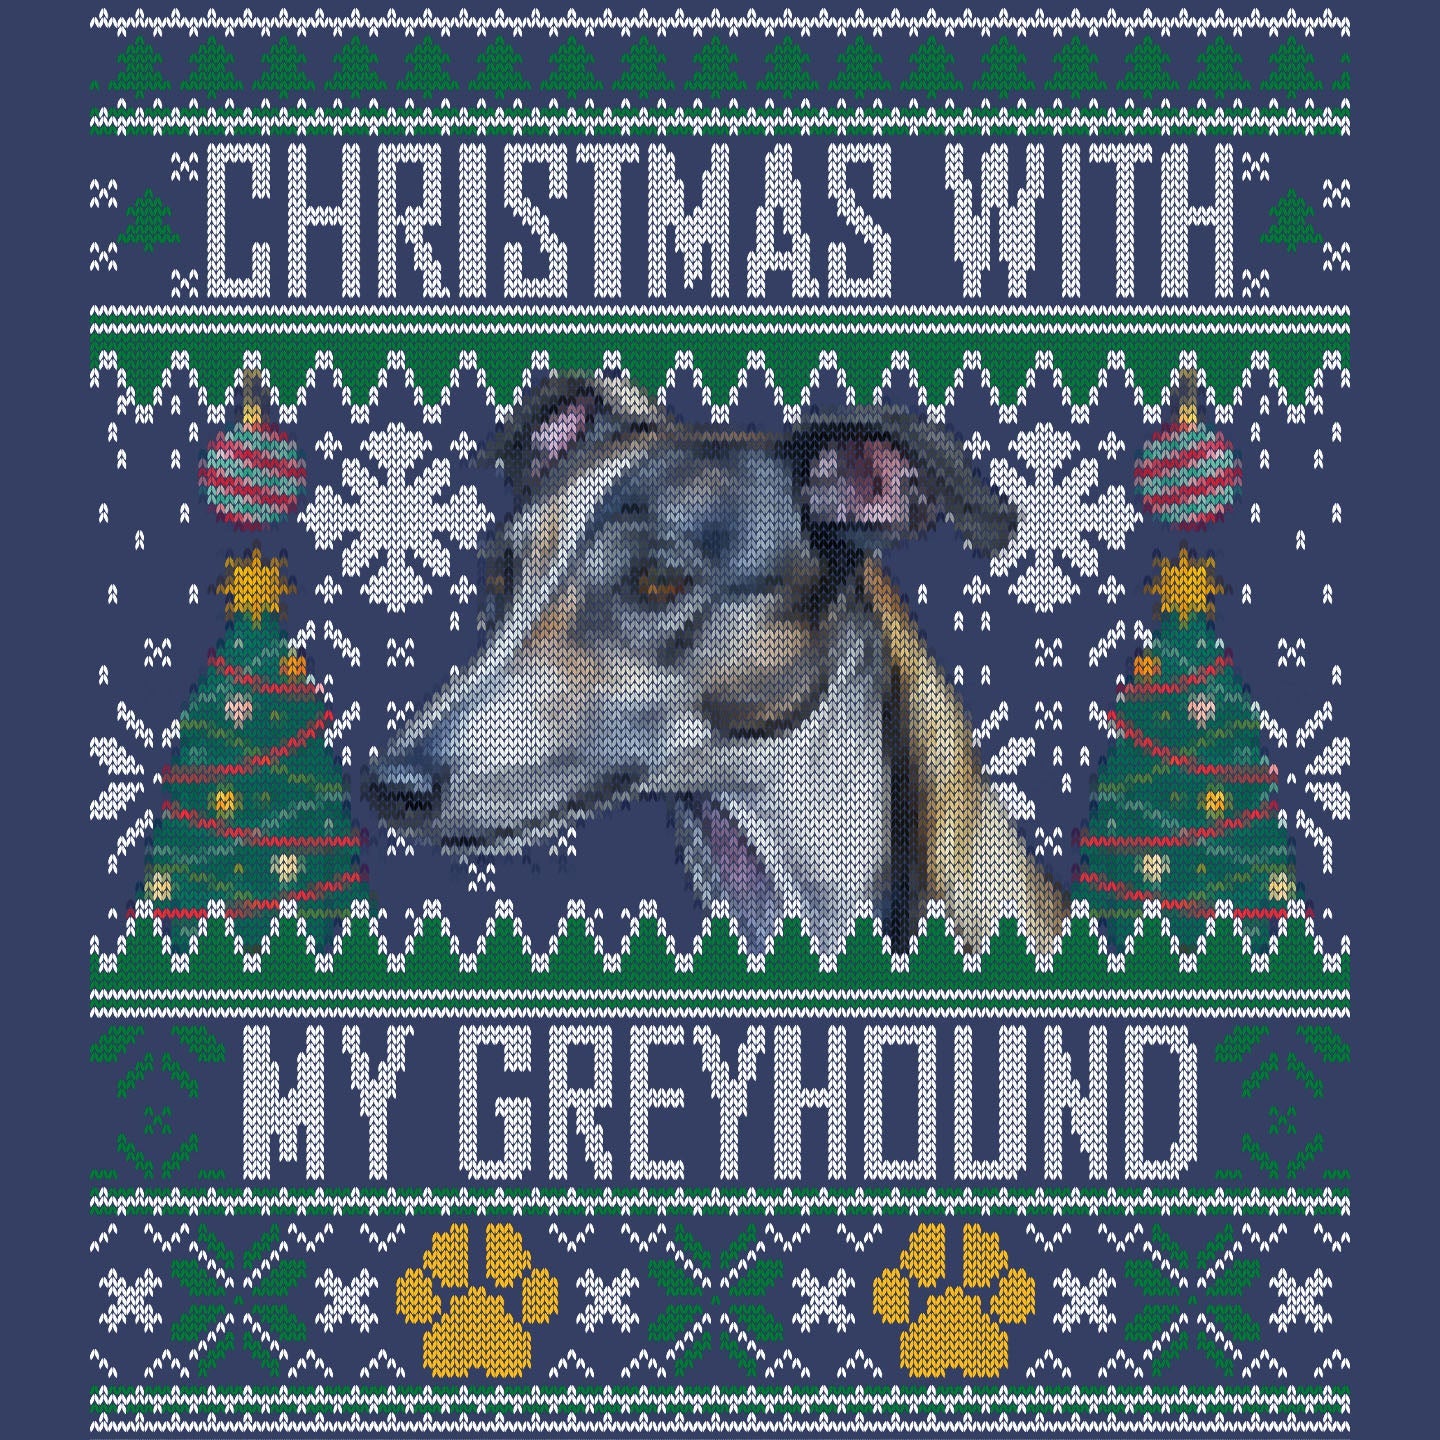 Ugly Sweater Christmas with My Greyhound - Adult Unisex Crewneck Sweatshirt